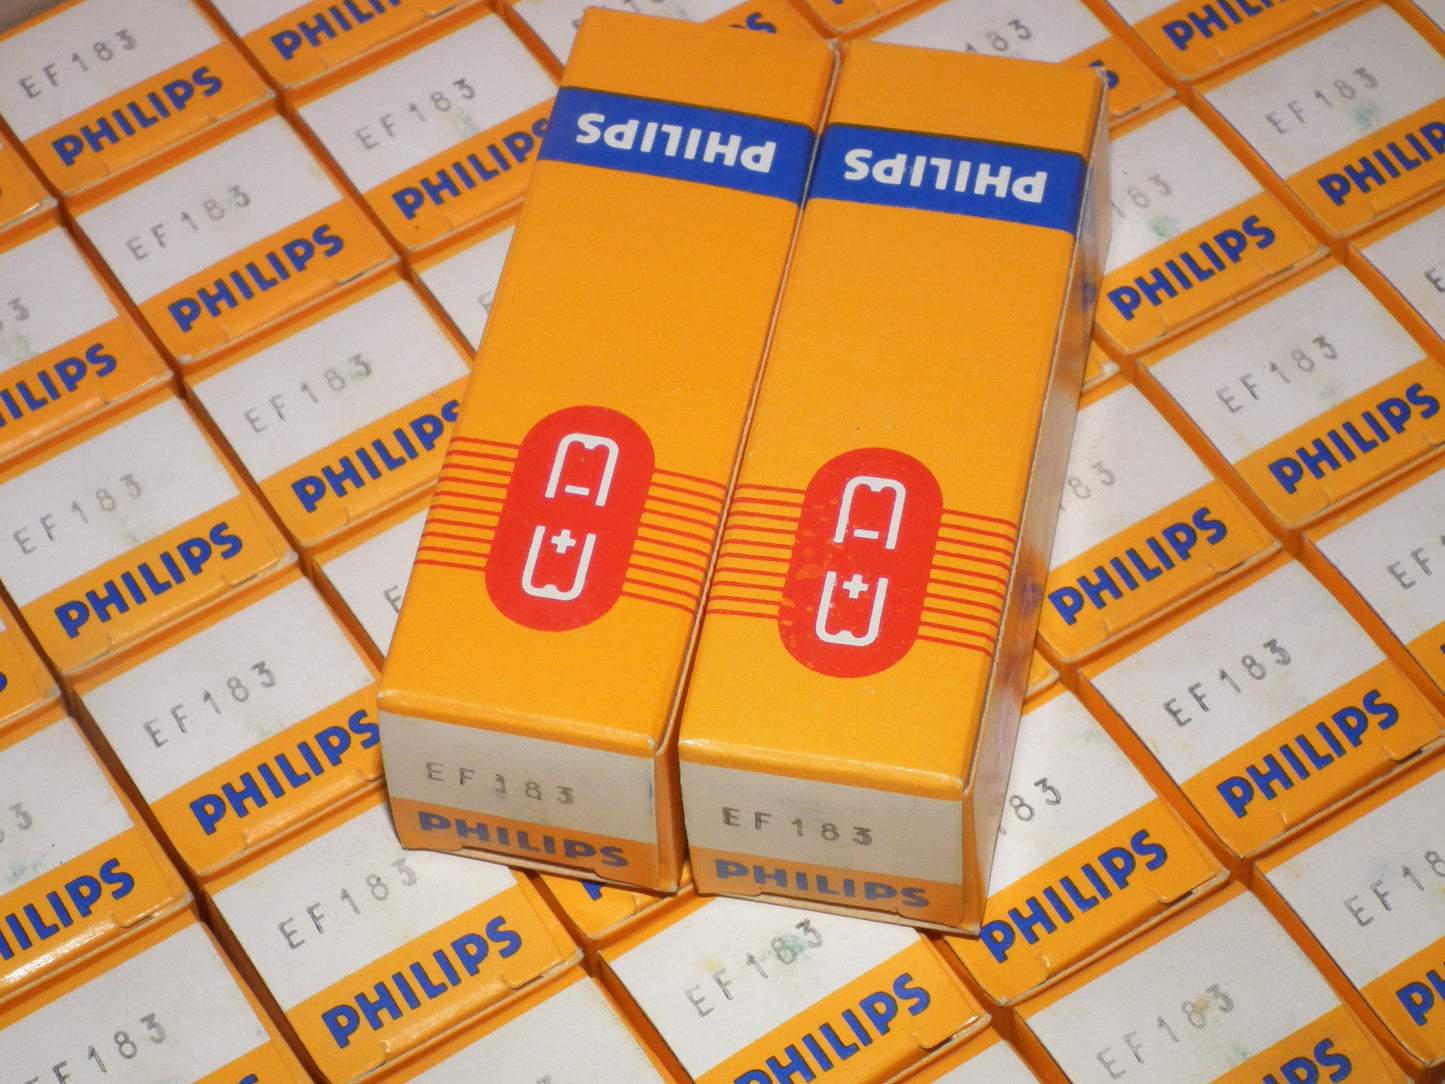 EF183 Philips NOS NIB 6EH7 One pair (2 tubes)